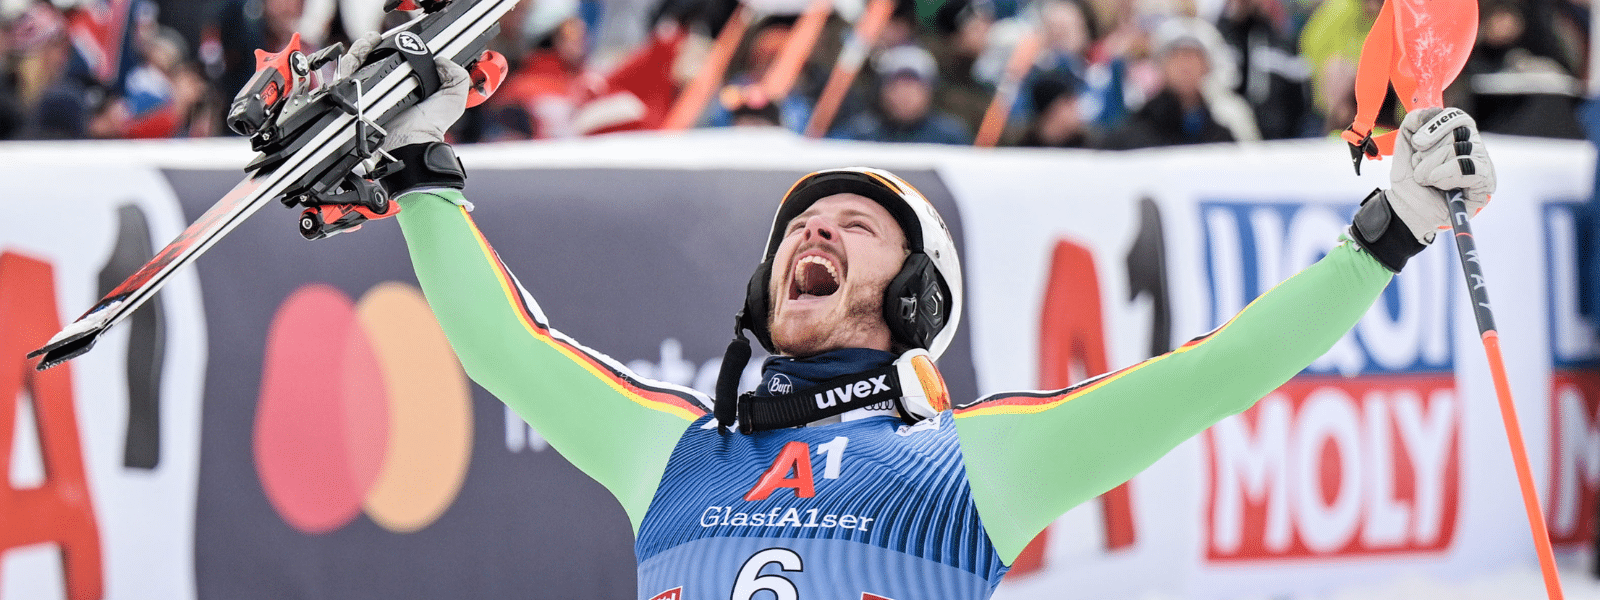 Linus Strasser Claims Victory in the Hahnenkamm Slalom